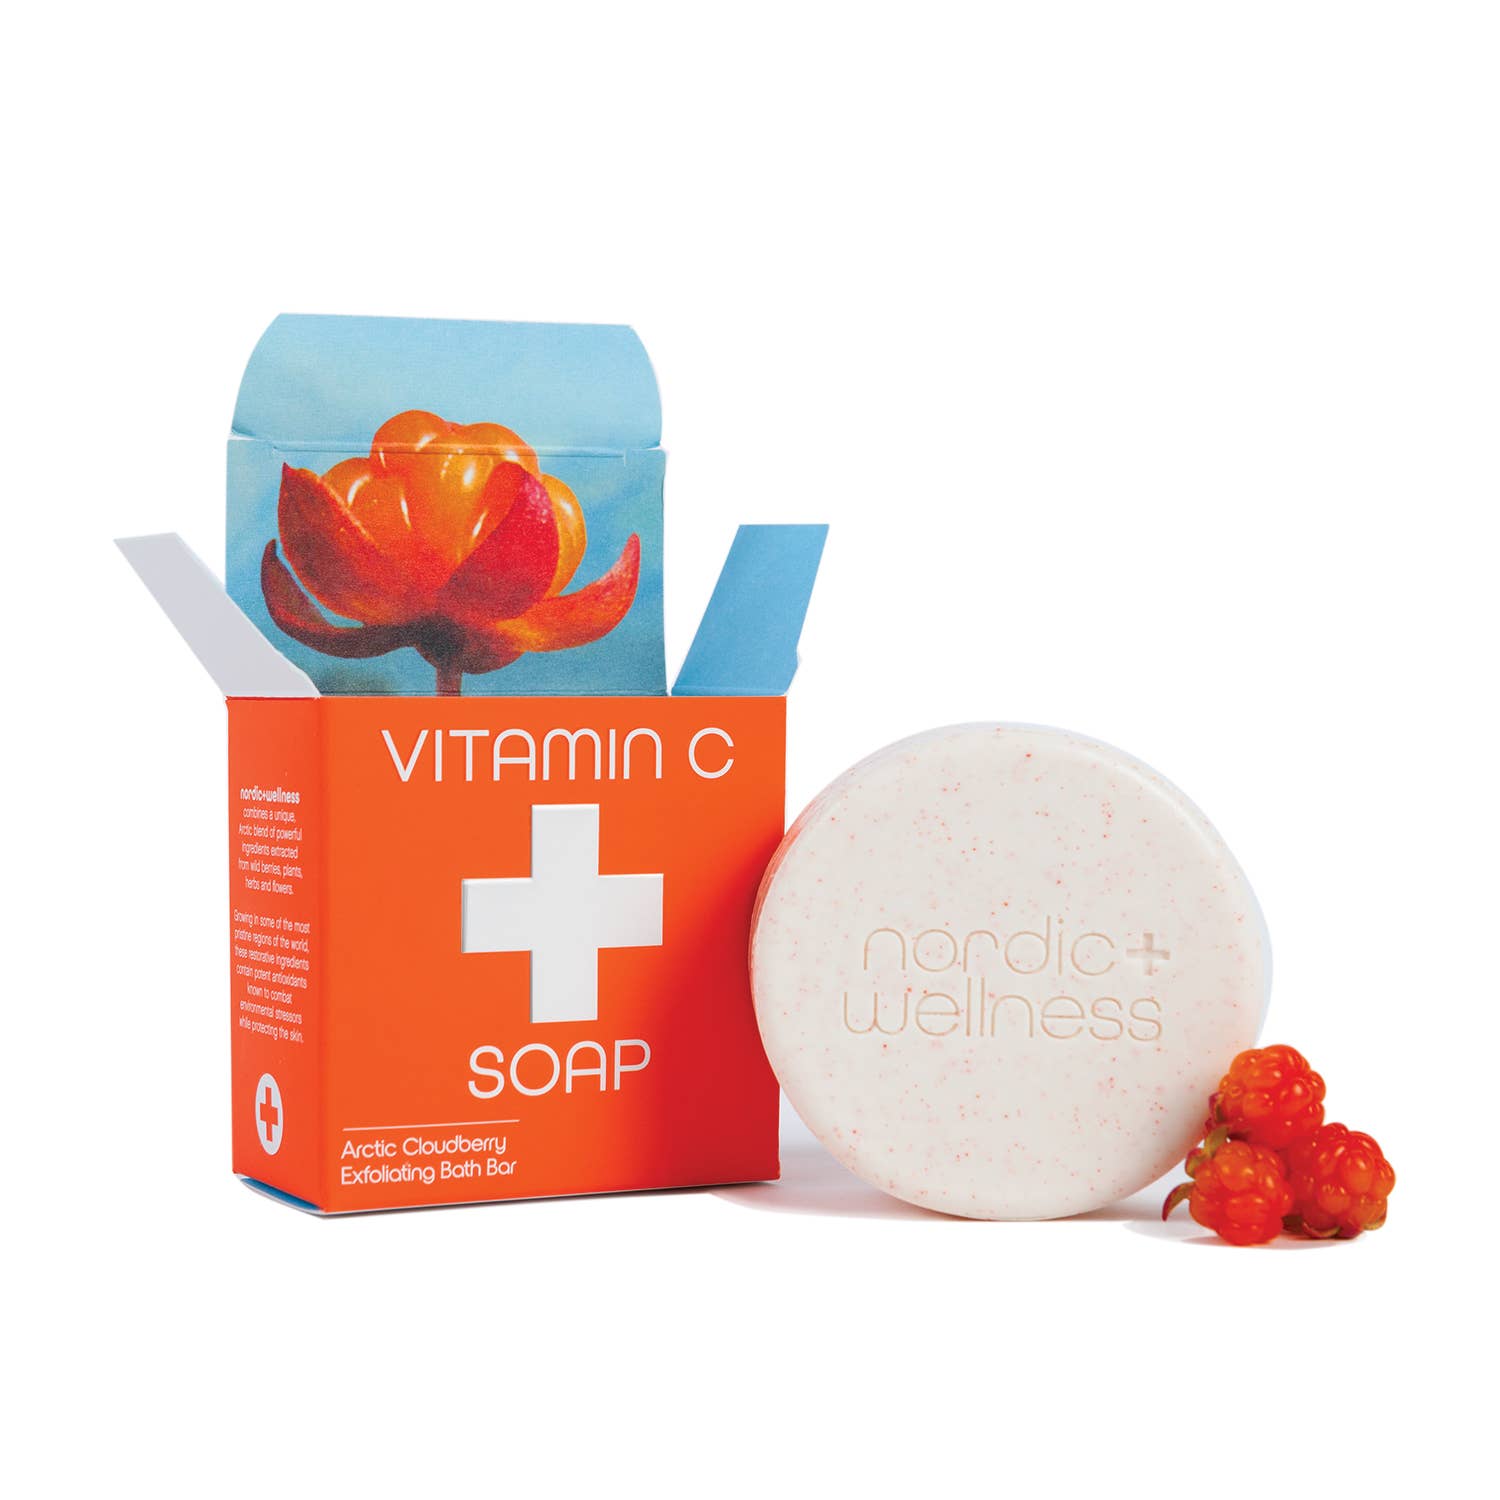 Soap: Nordic+Wellness™ Vitamin C Soap